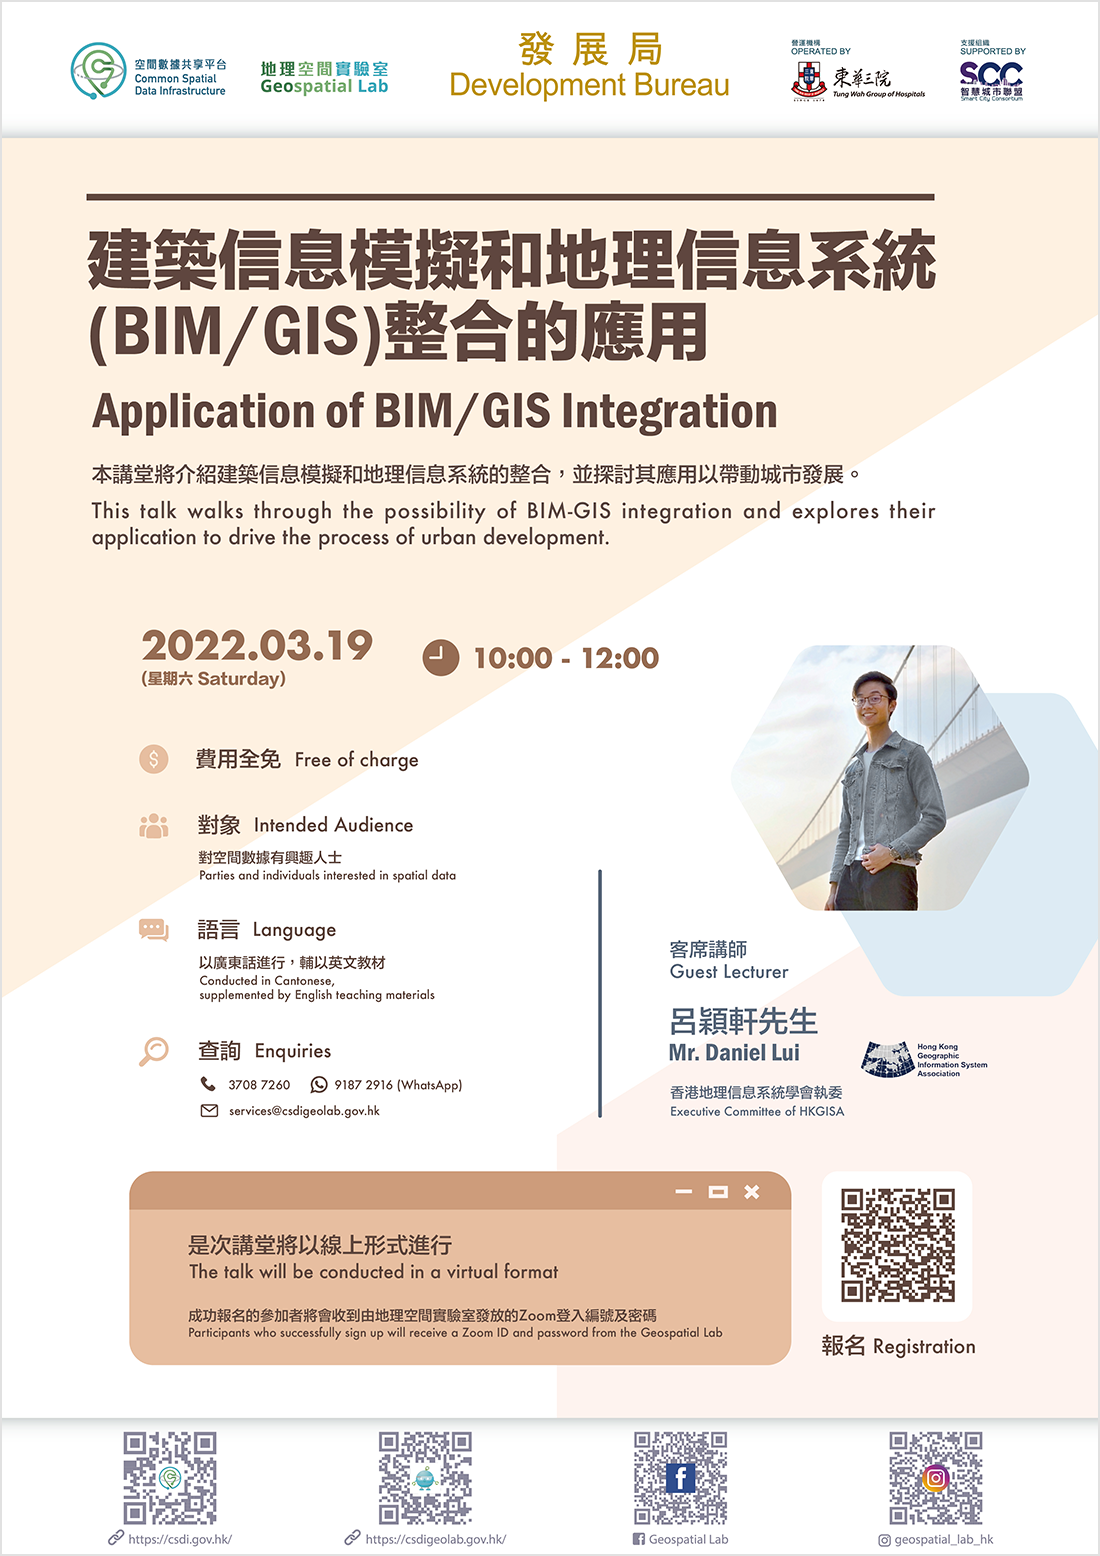 Professional Geospatial Talk - Application of BIM/GIS Integration